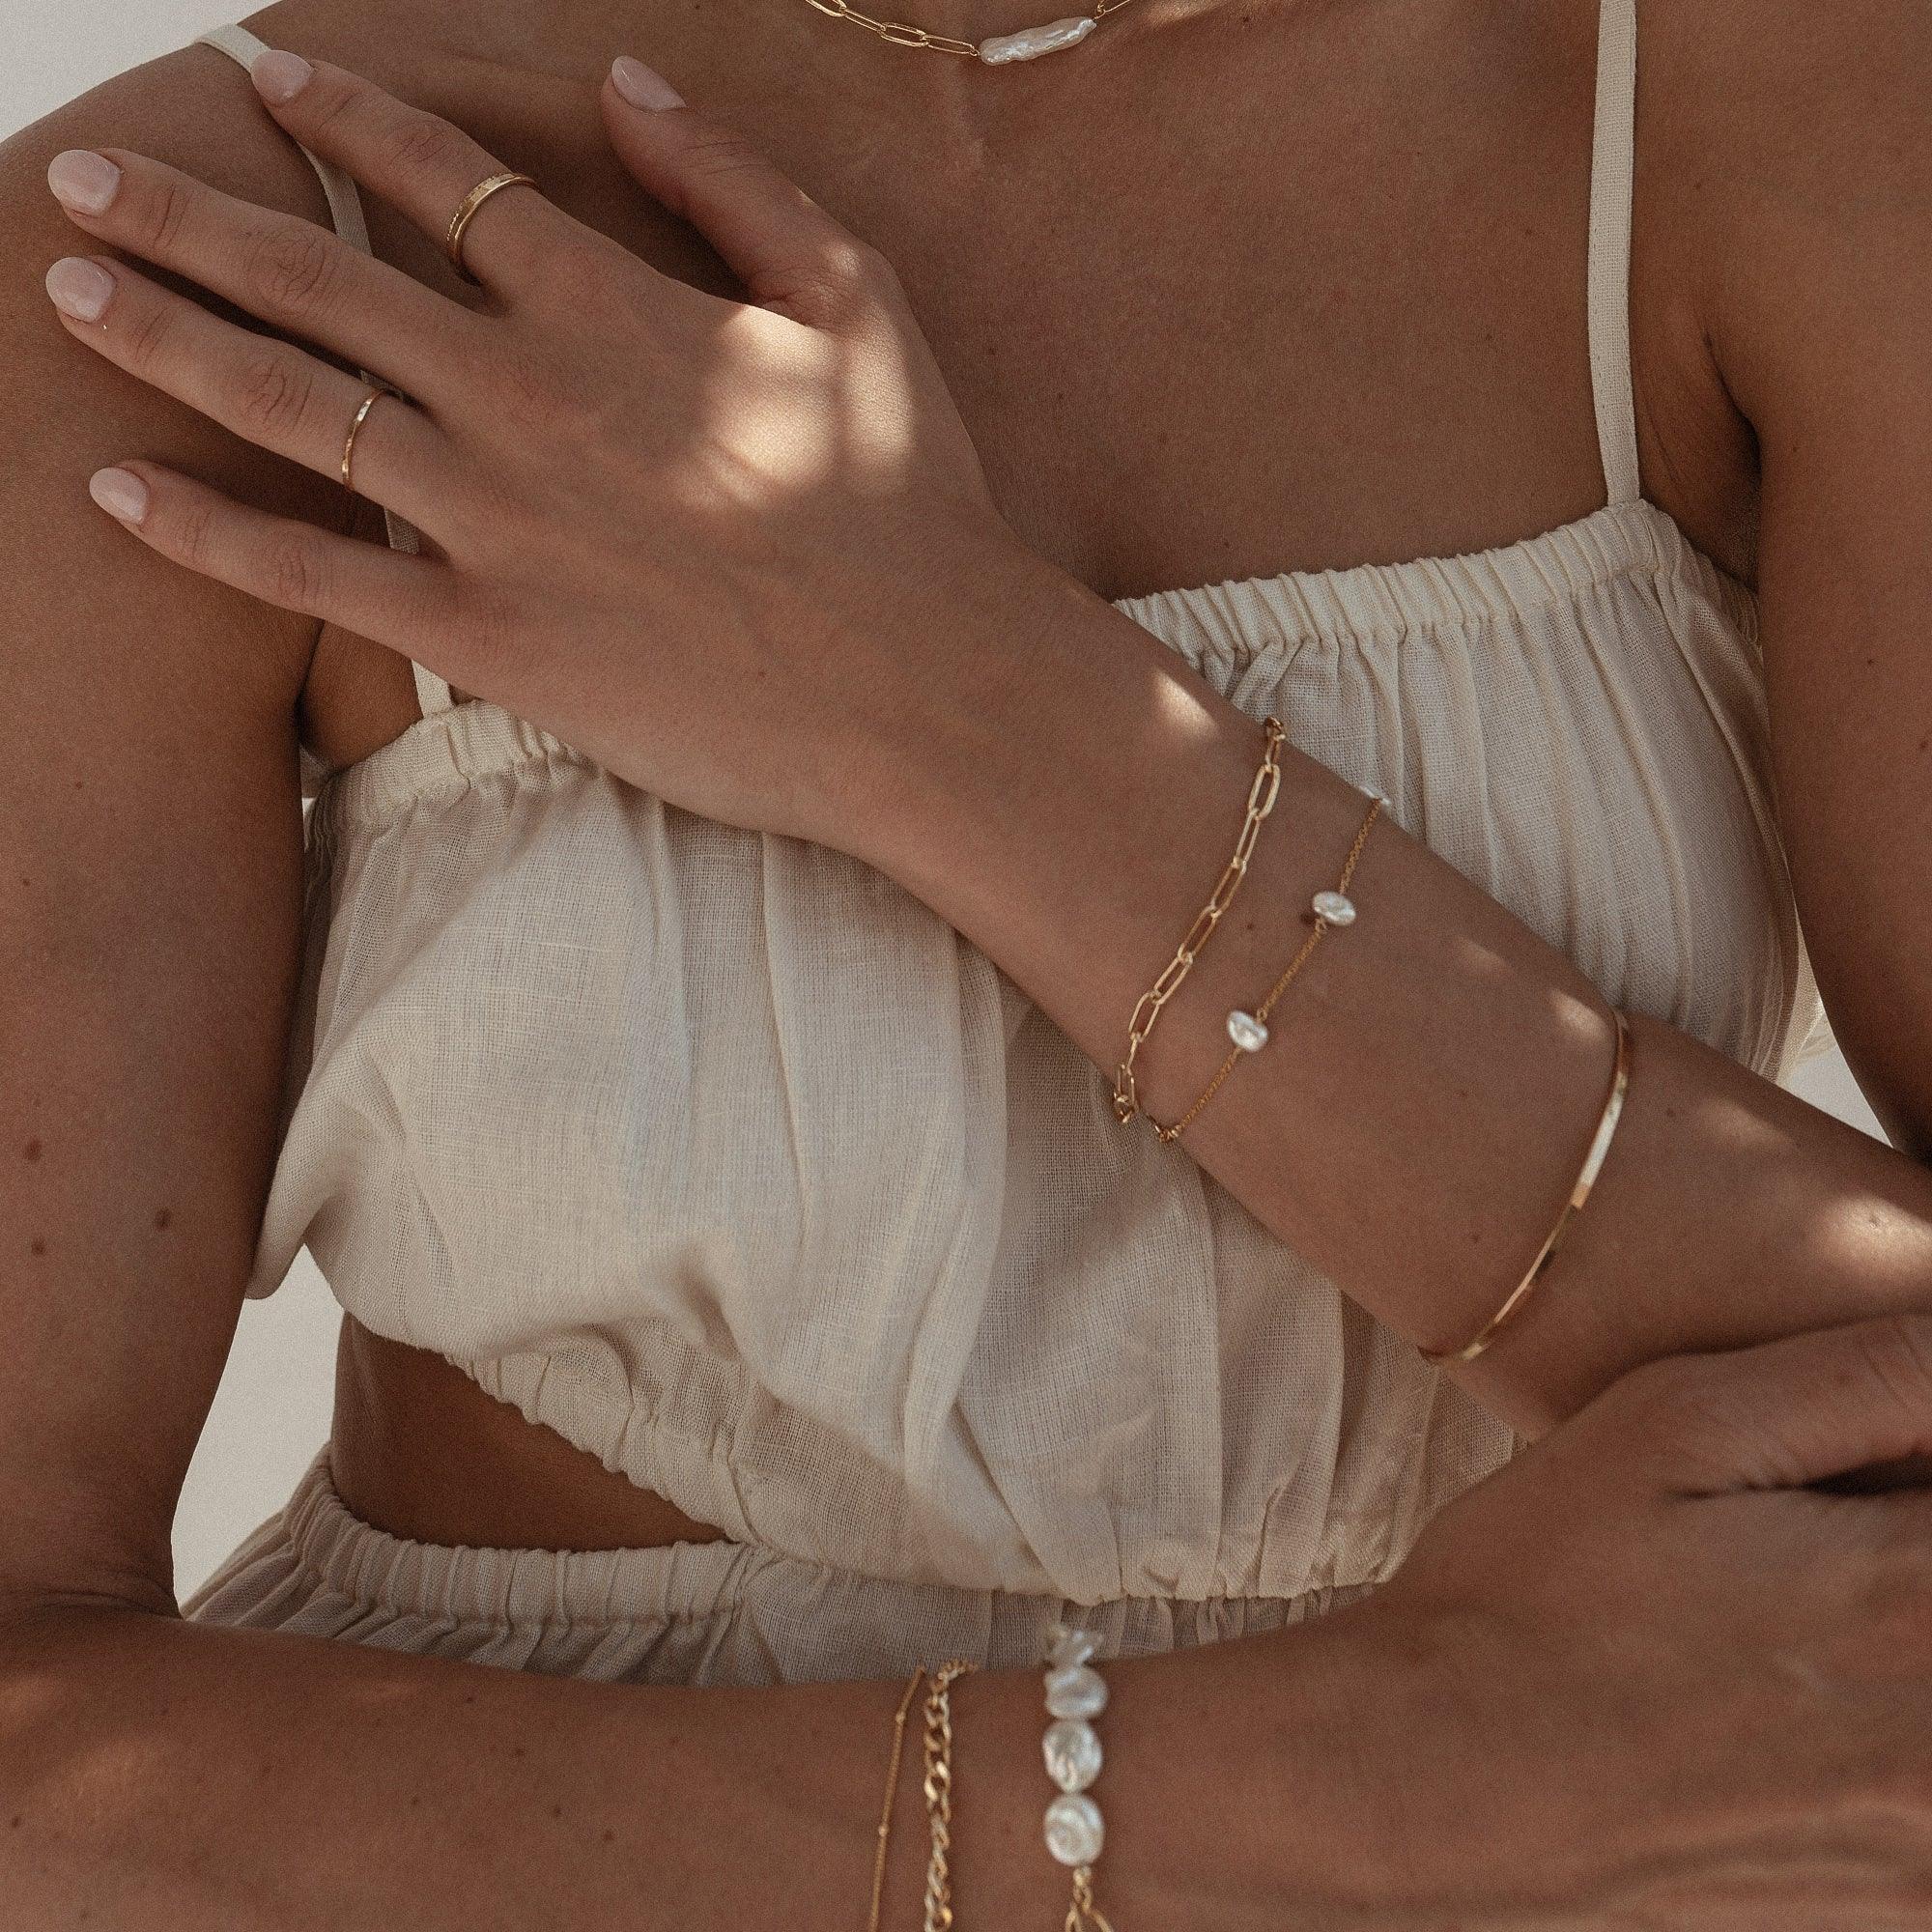 Cassis Keshi Pearl 14k Gold Bracelet - ELLA PALM